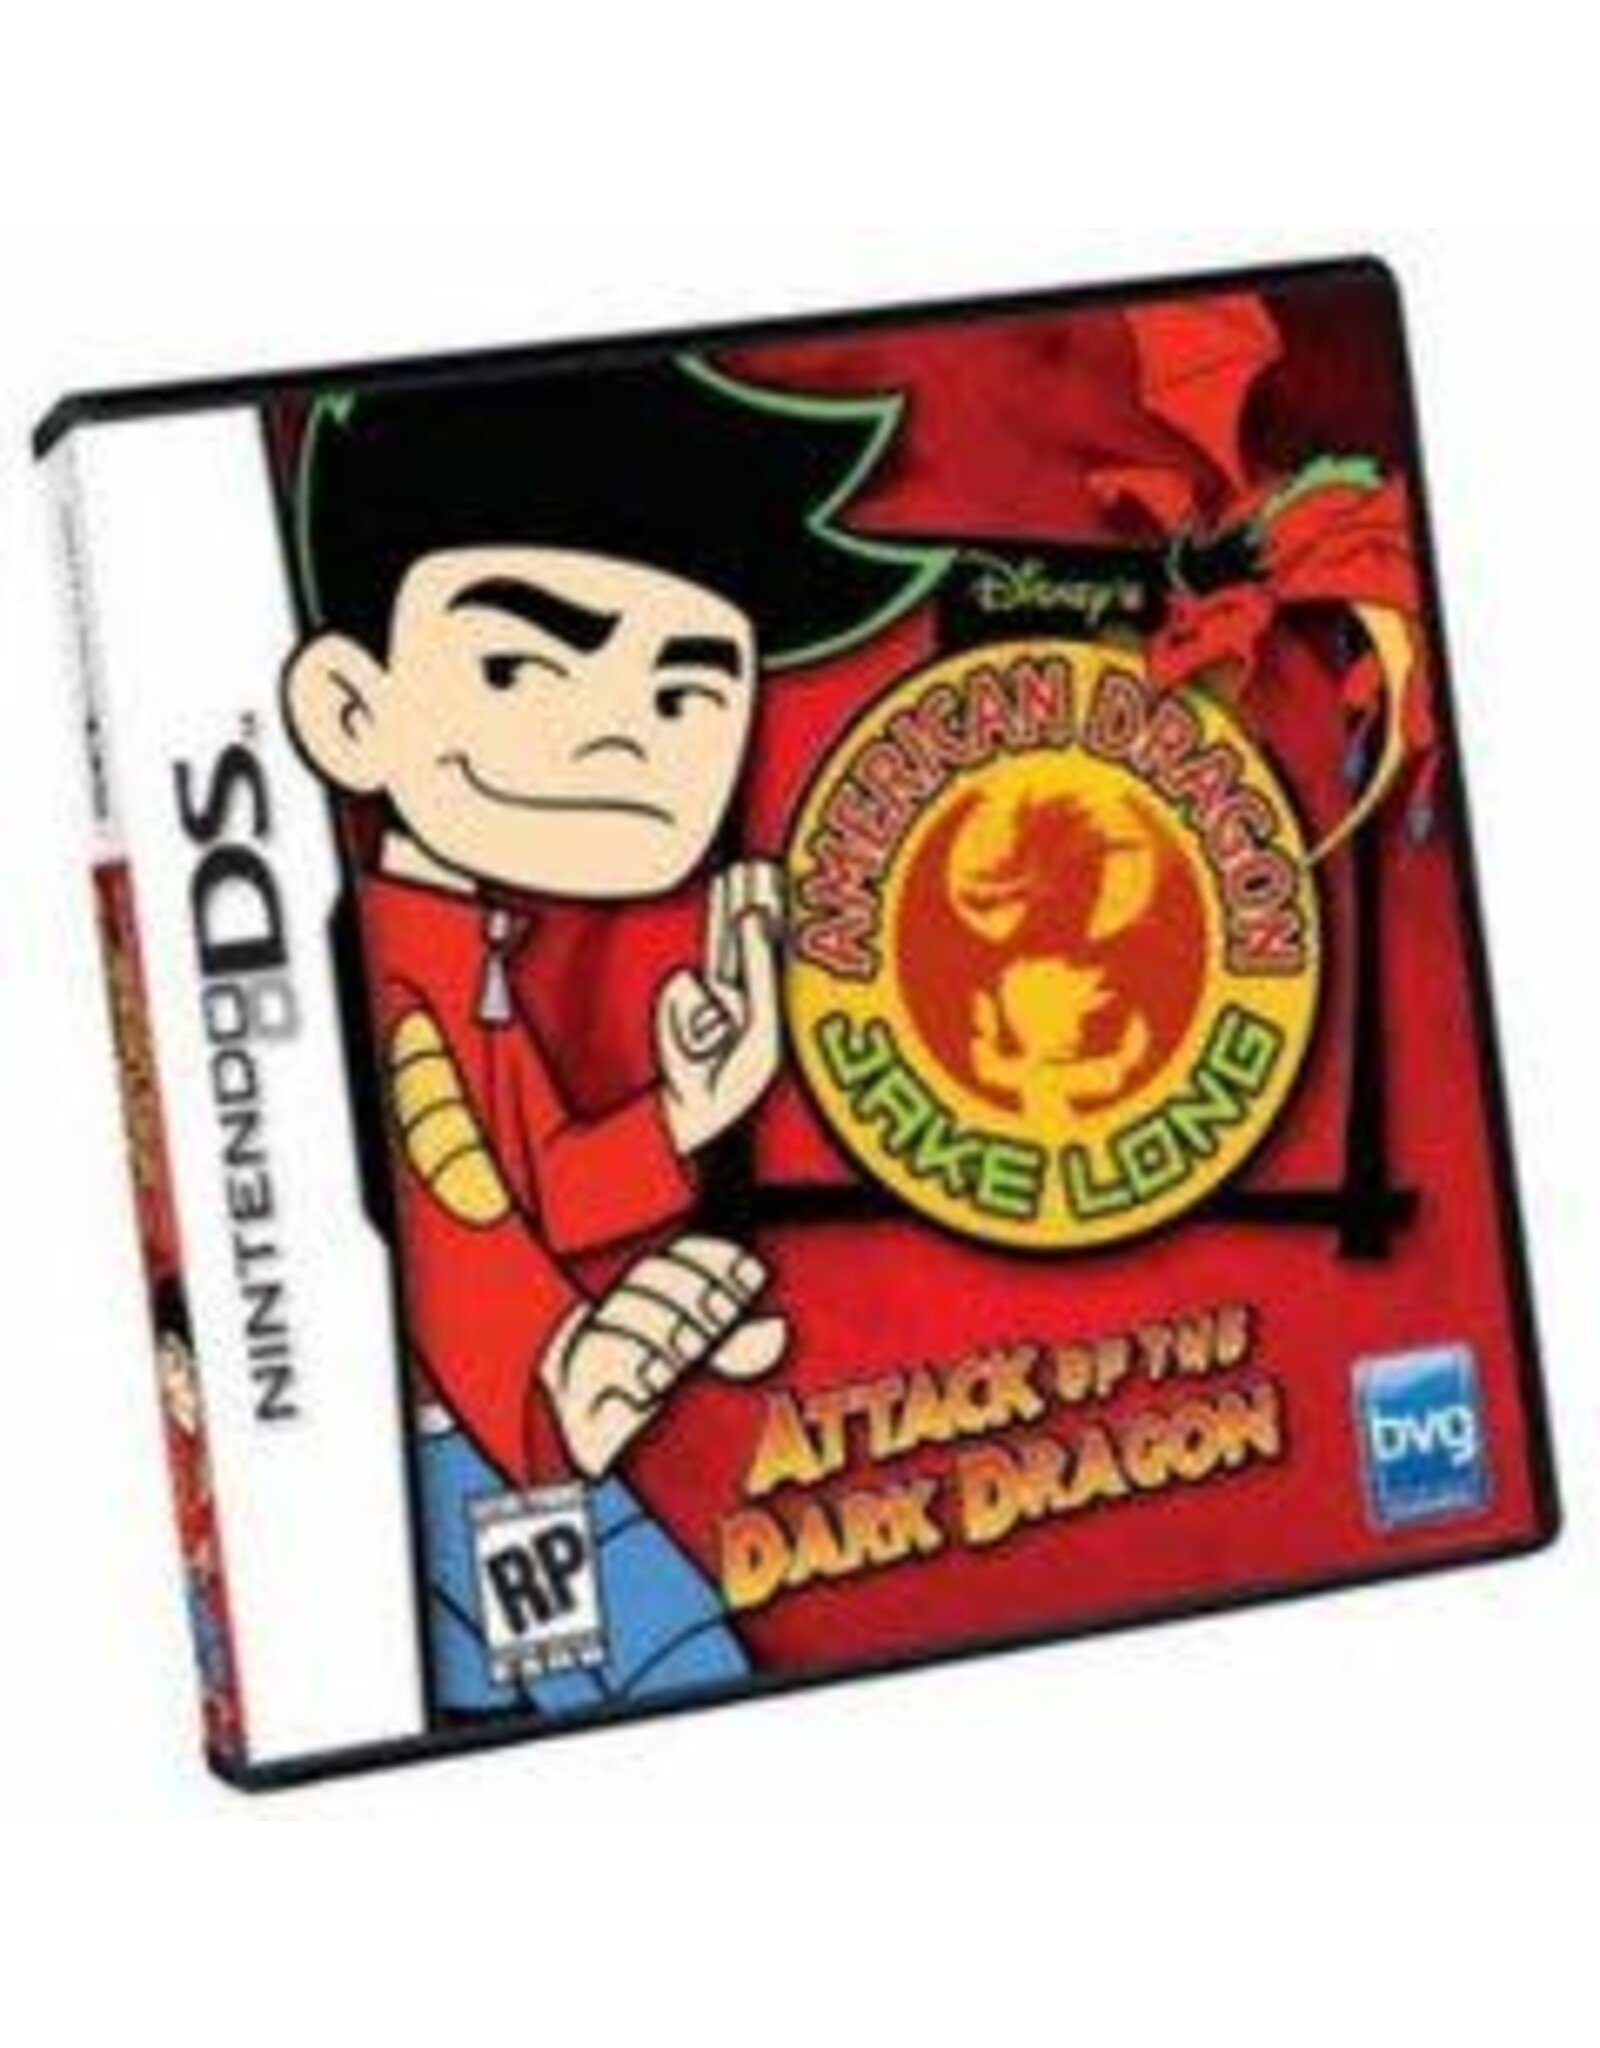 Nintendo DS American Dragon Jake Long Attack of the Dark Dragon (CiB)